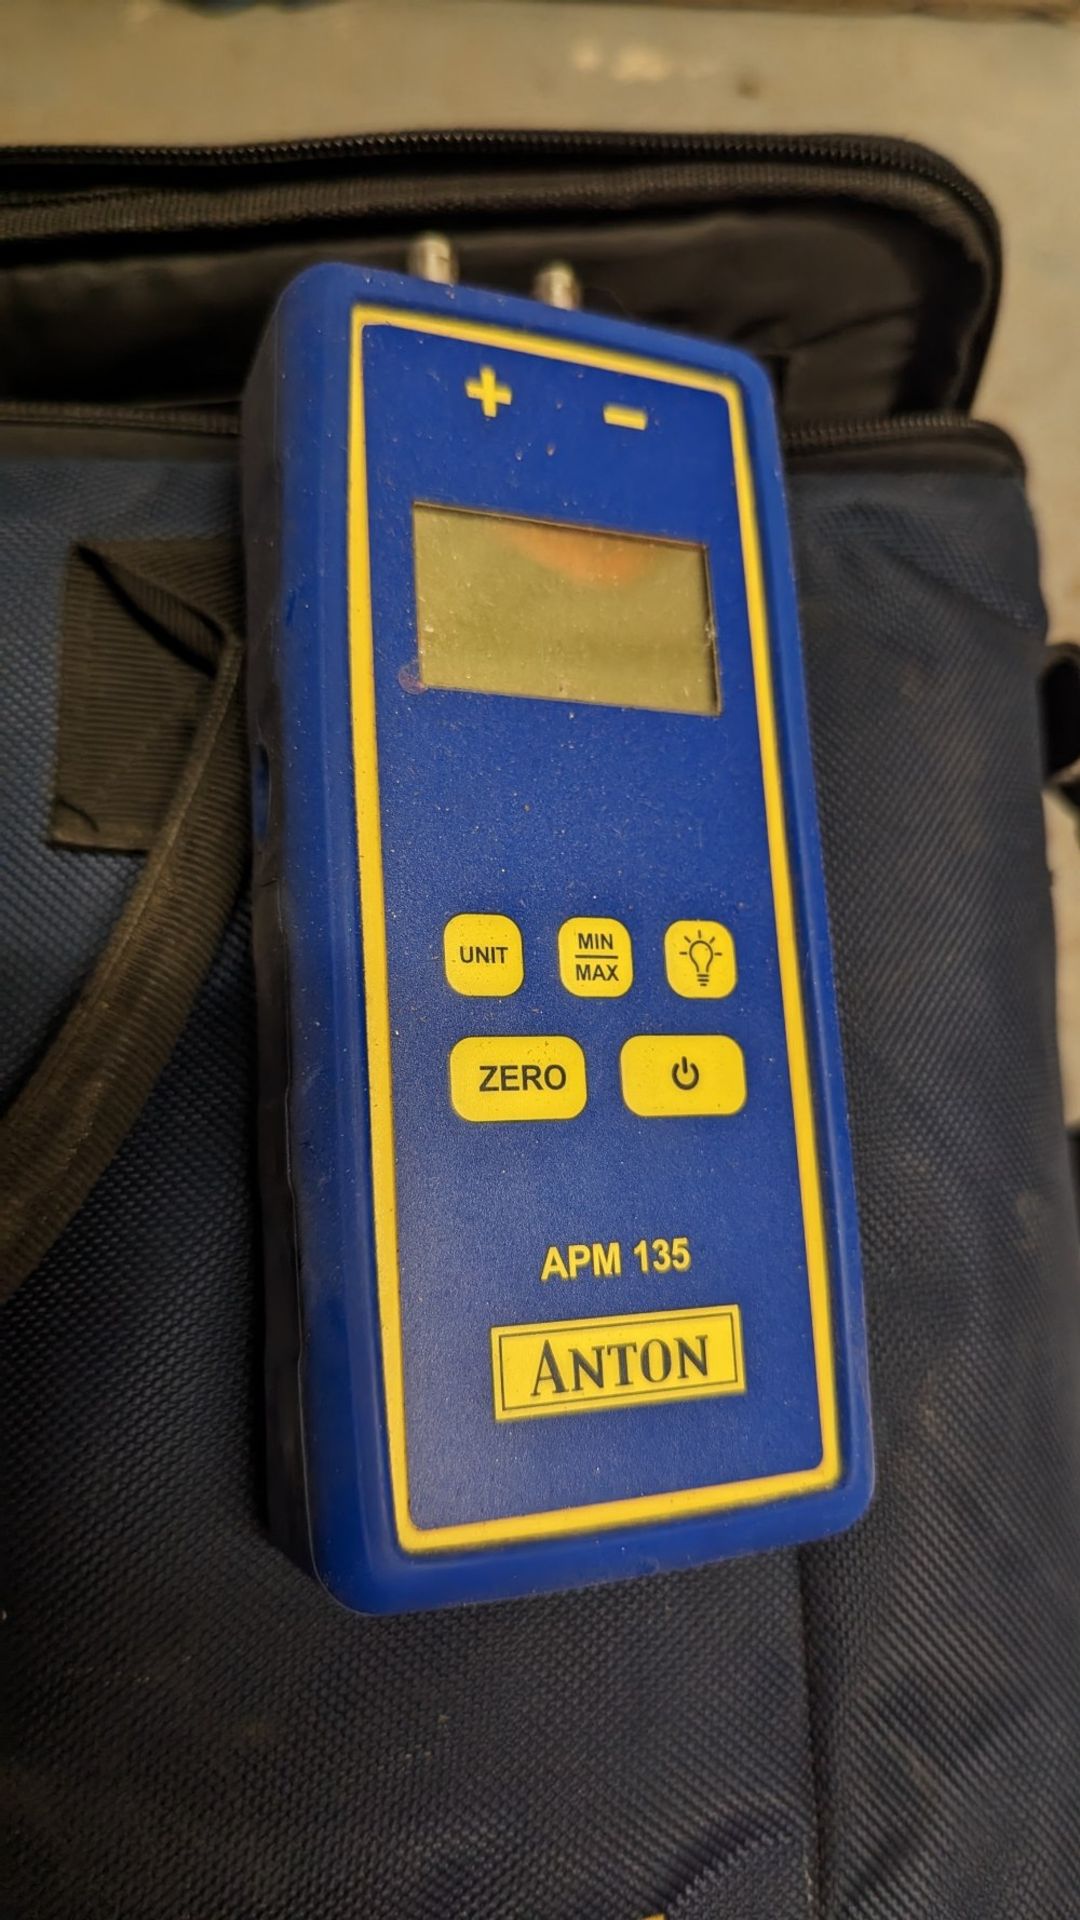 Anton sprint pro gas analyser set - Image 6 of 9